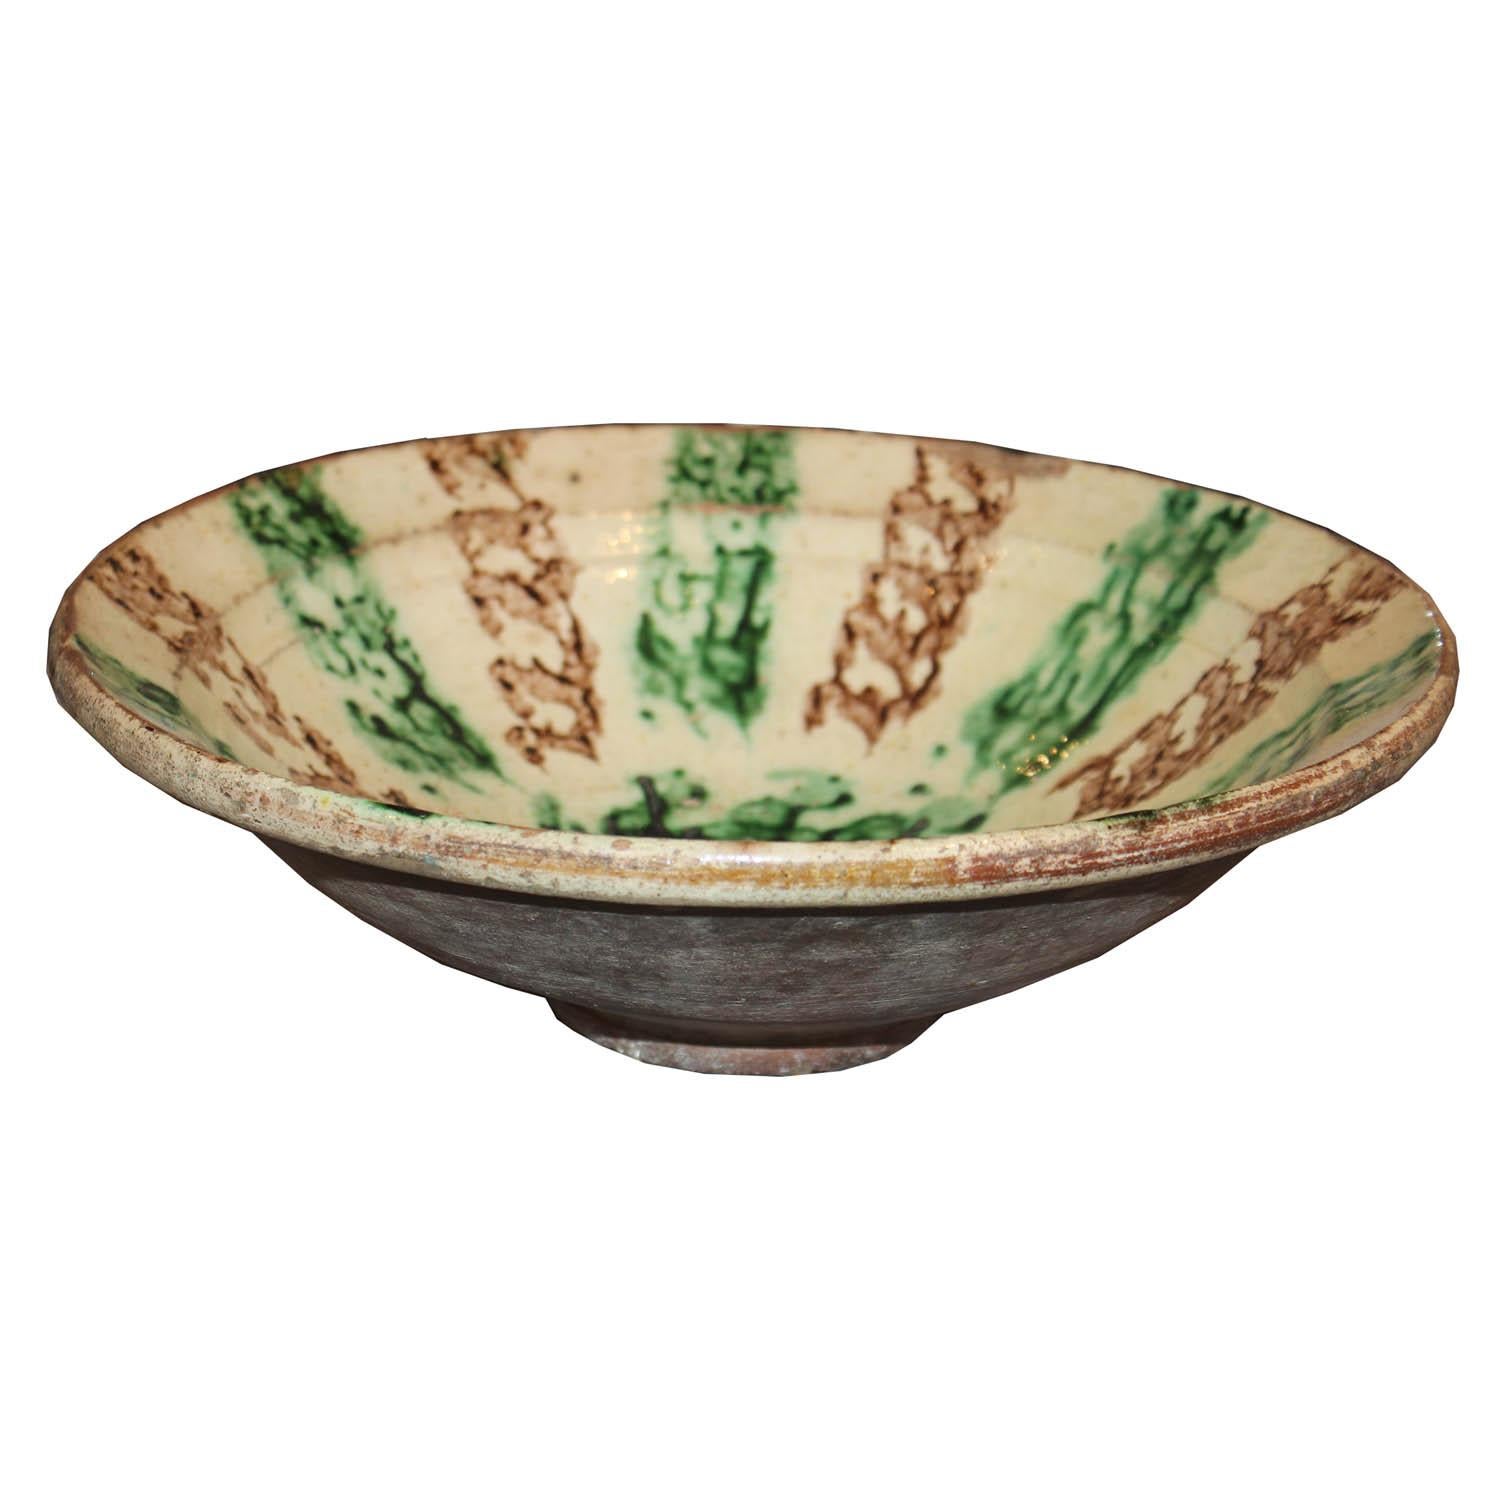 Moroccan Ceramic Bowl In Good Condition For Sale In San Francisco, CA